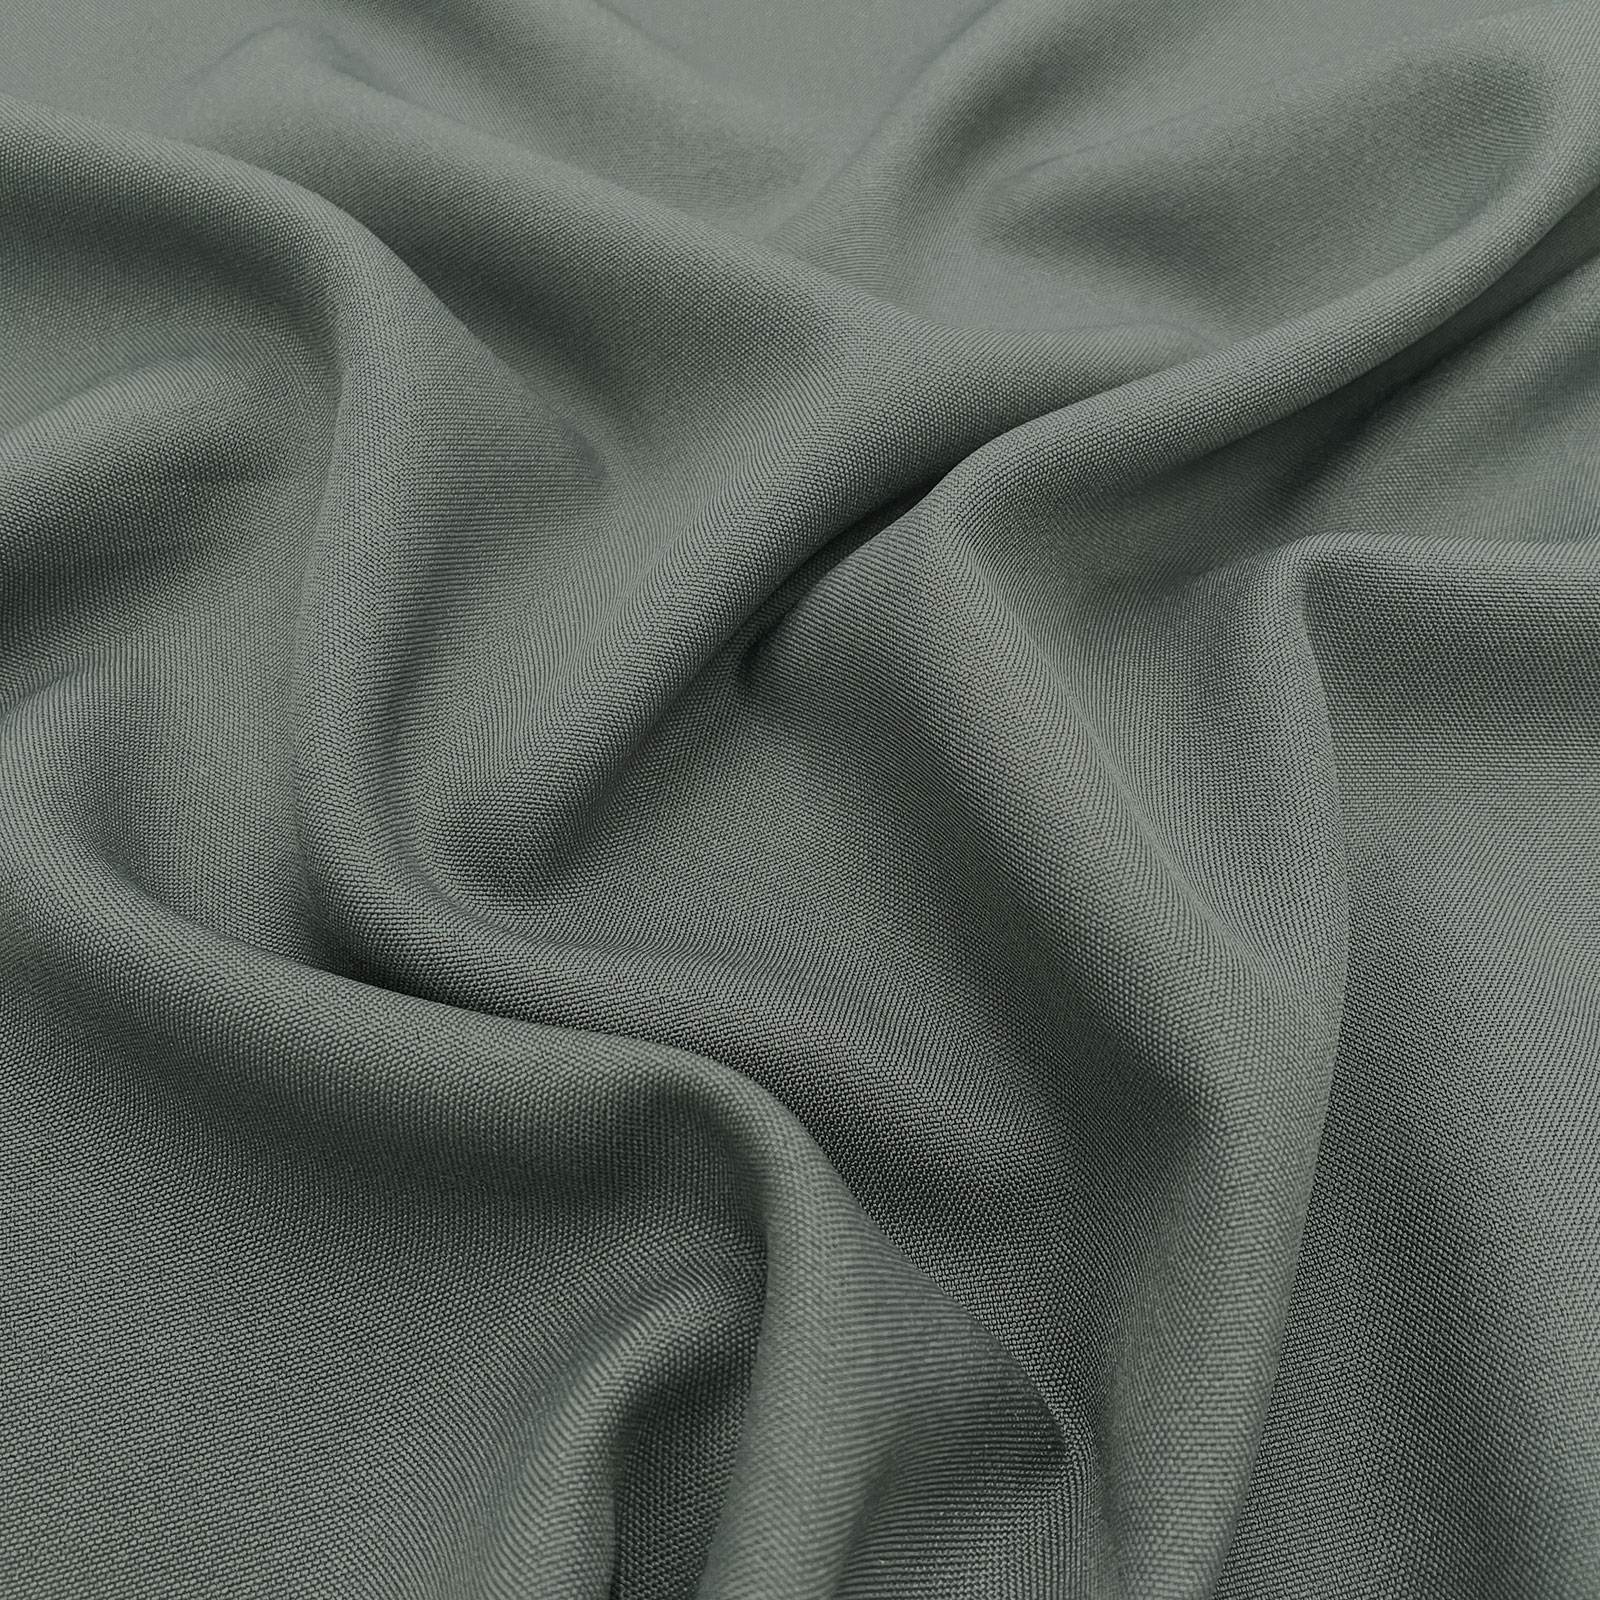 Trekking Functional fabric - elastic & breathable - Dark Grey